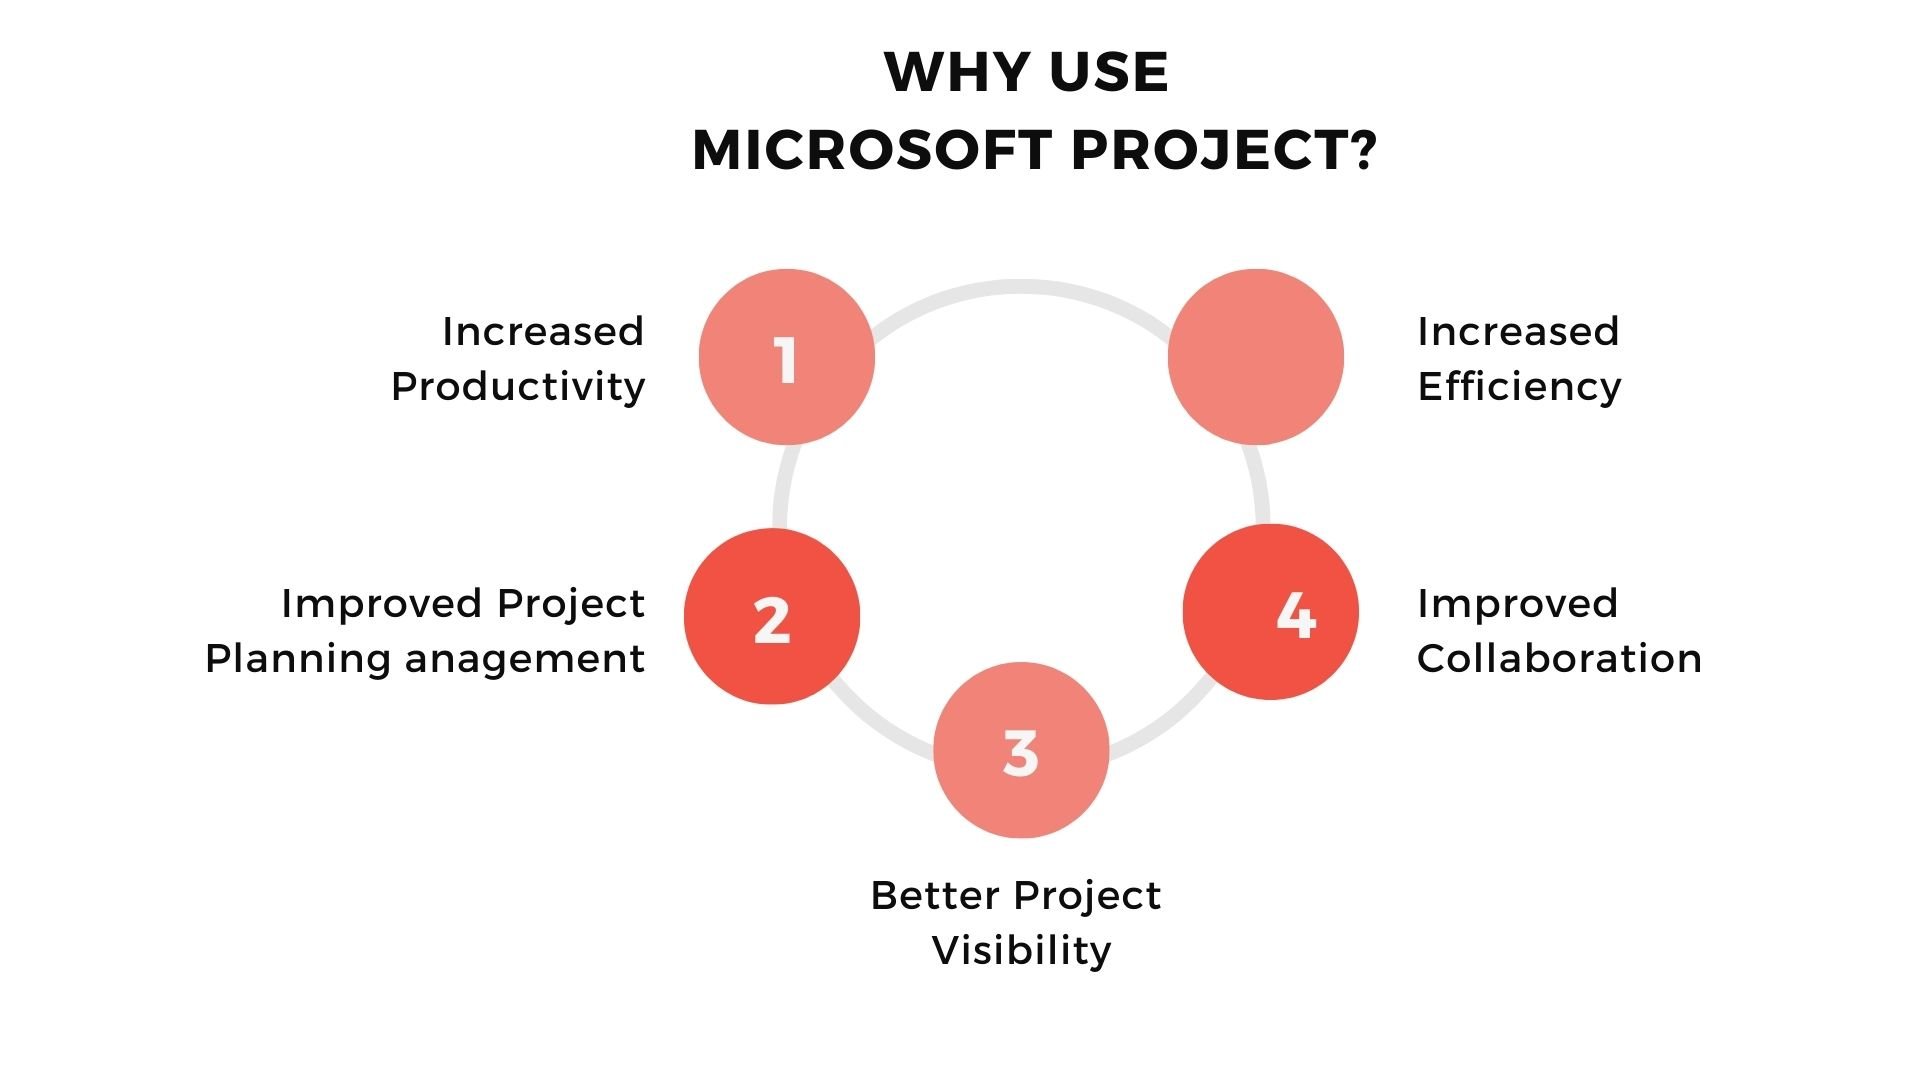 Benefits of Using Microsoft Project